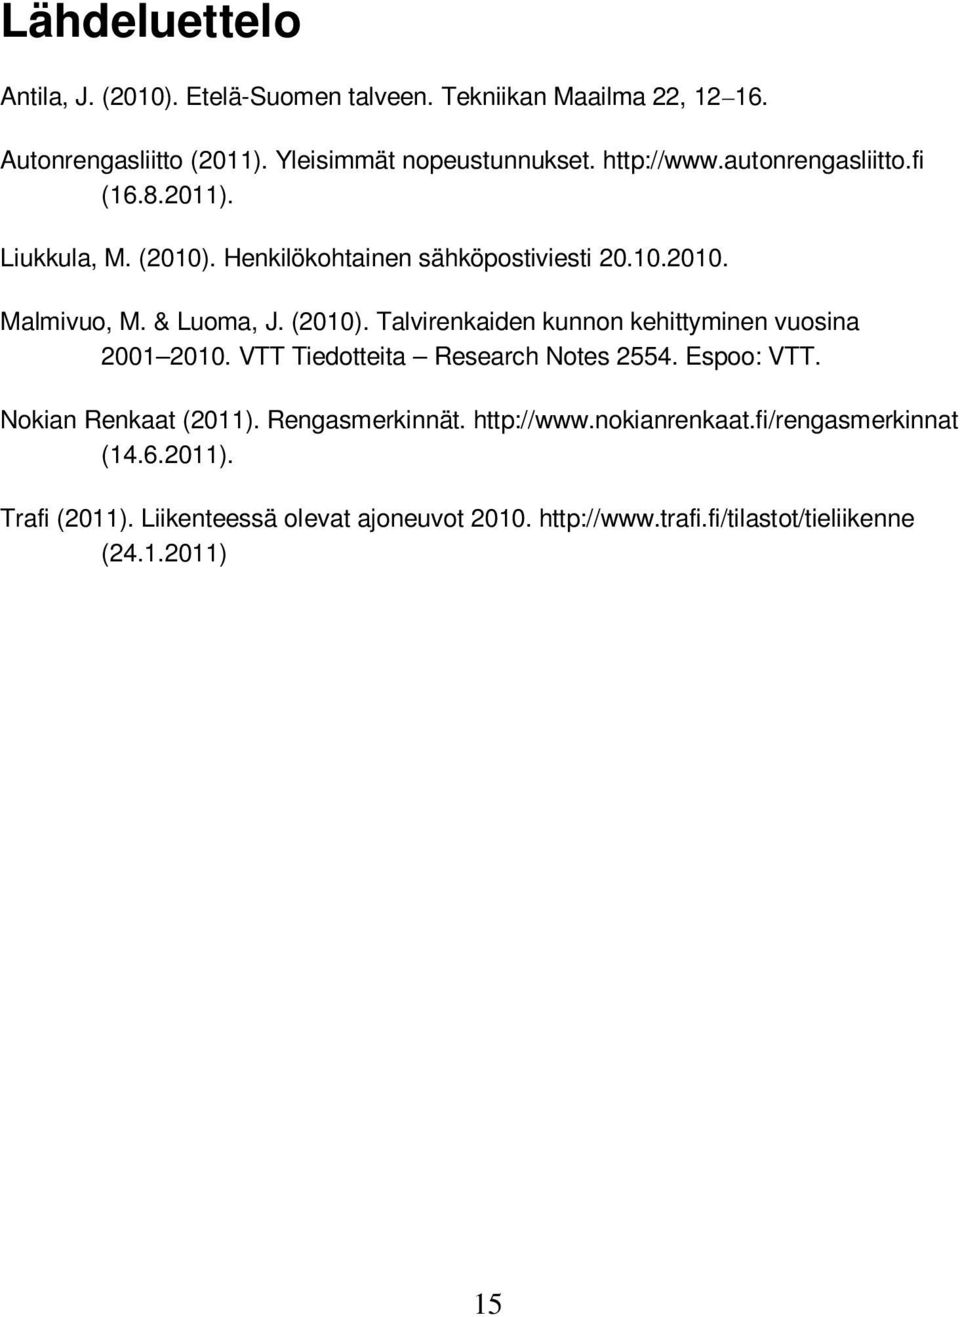 VTT Tiedotteita Research Notes 2554. Espoo: VTT. Nokian Renkaat (2011). Rengasmerkinnät. http://www.nokianrenkaat.fi/rengasmerkinnat (14.6.2011). Trafi (2011).